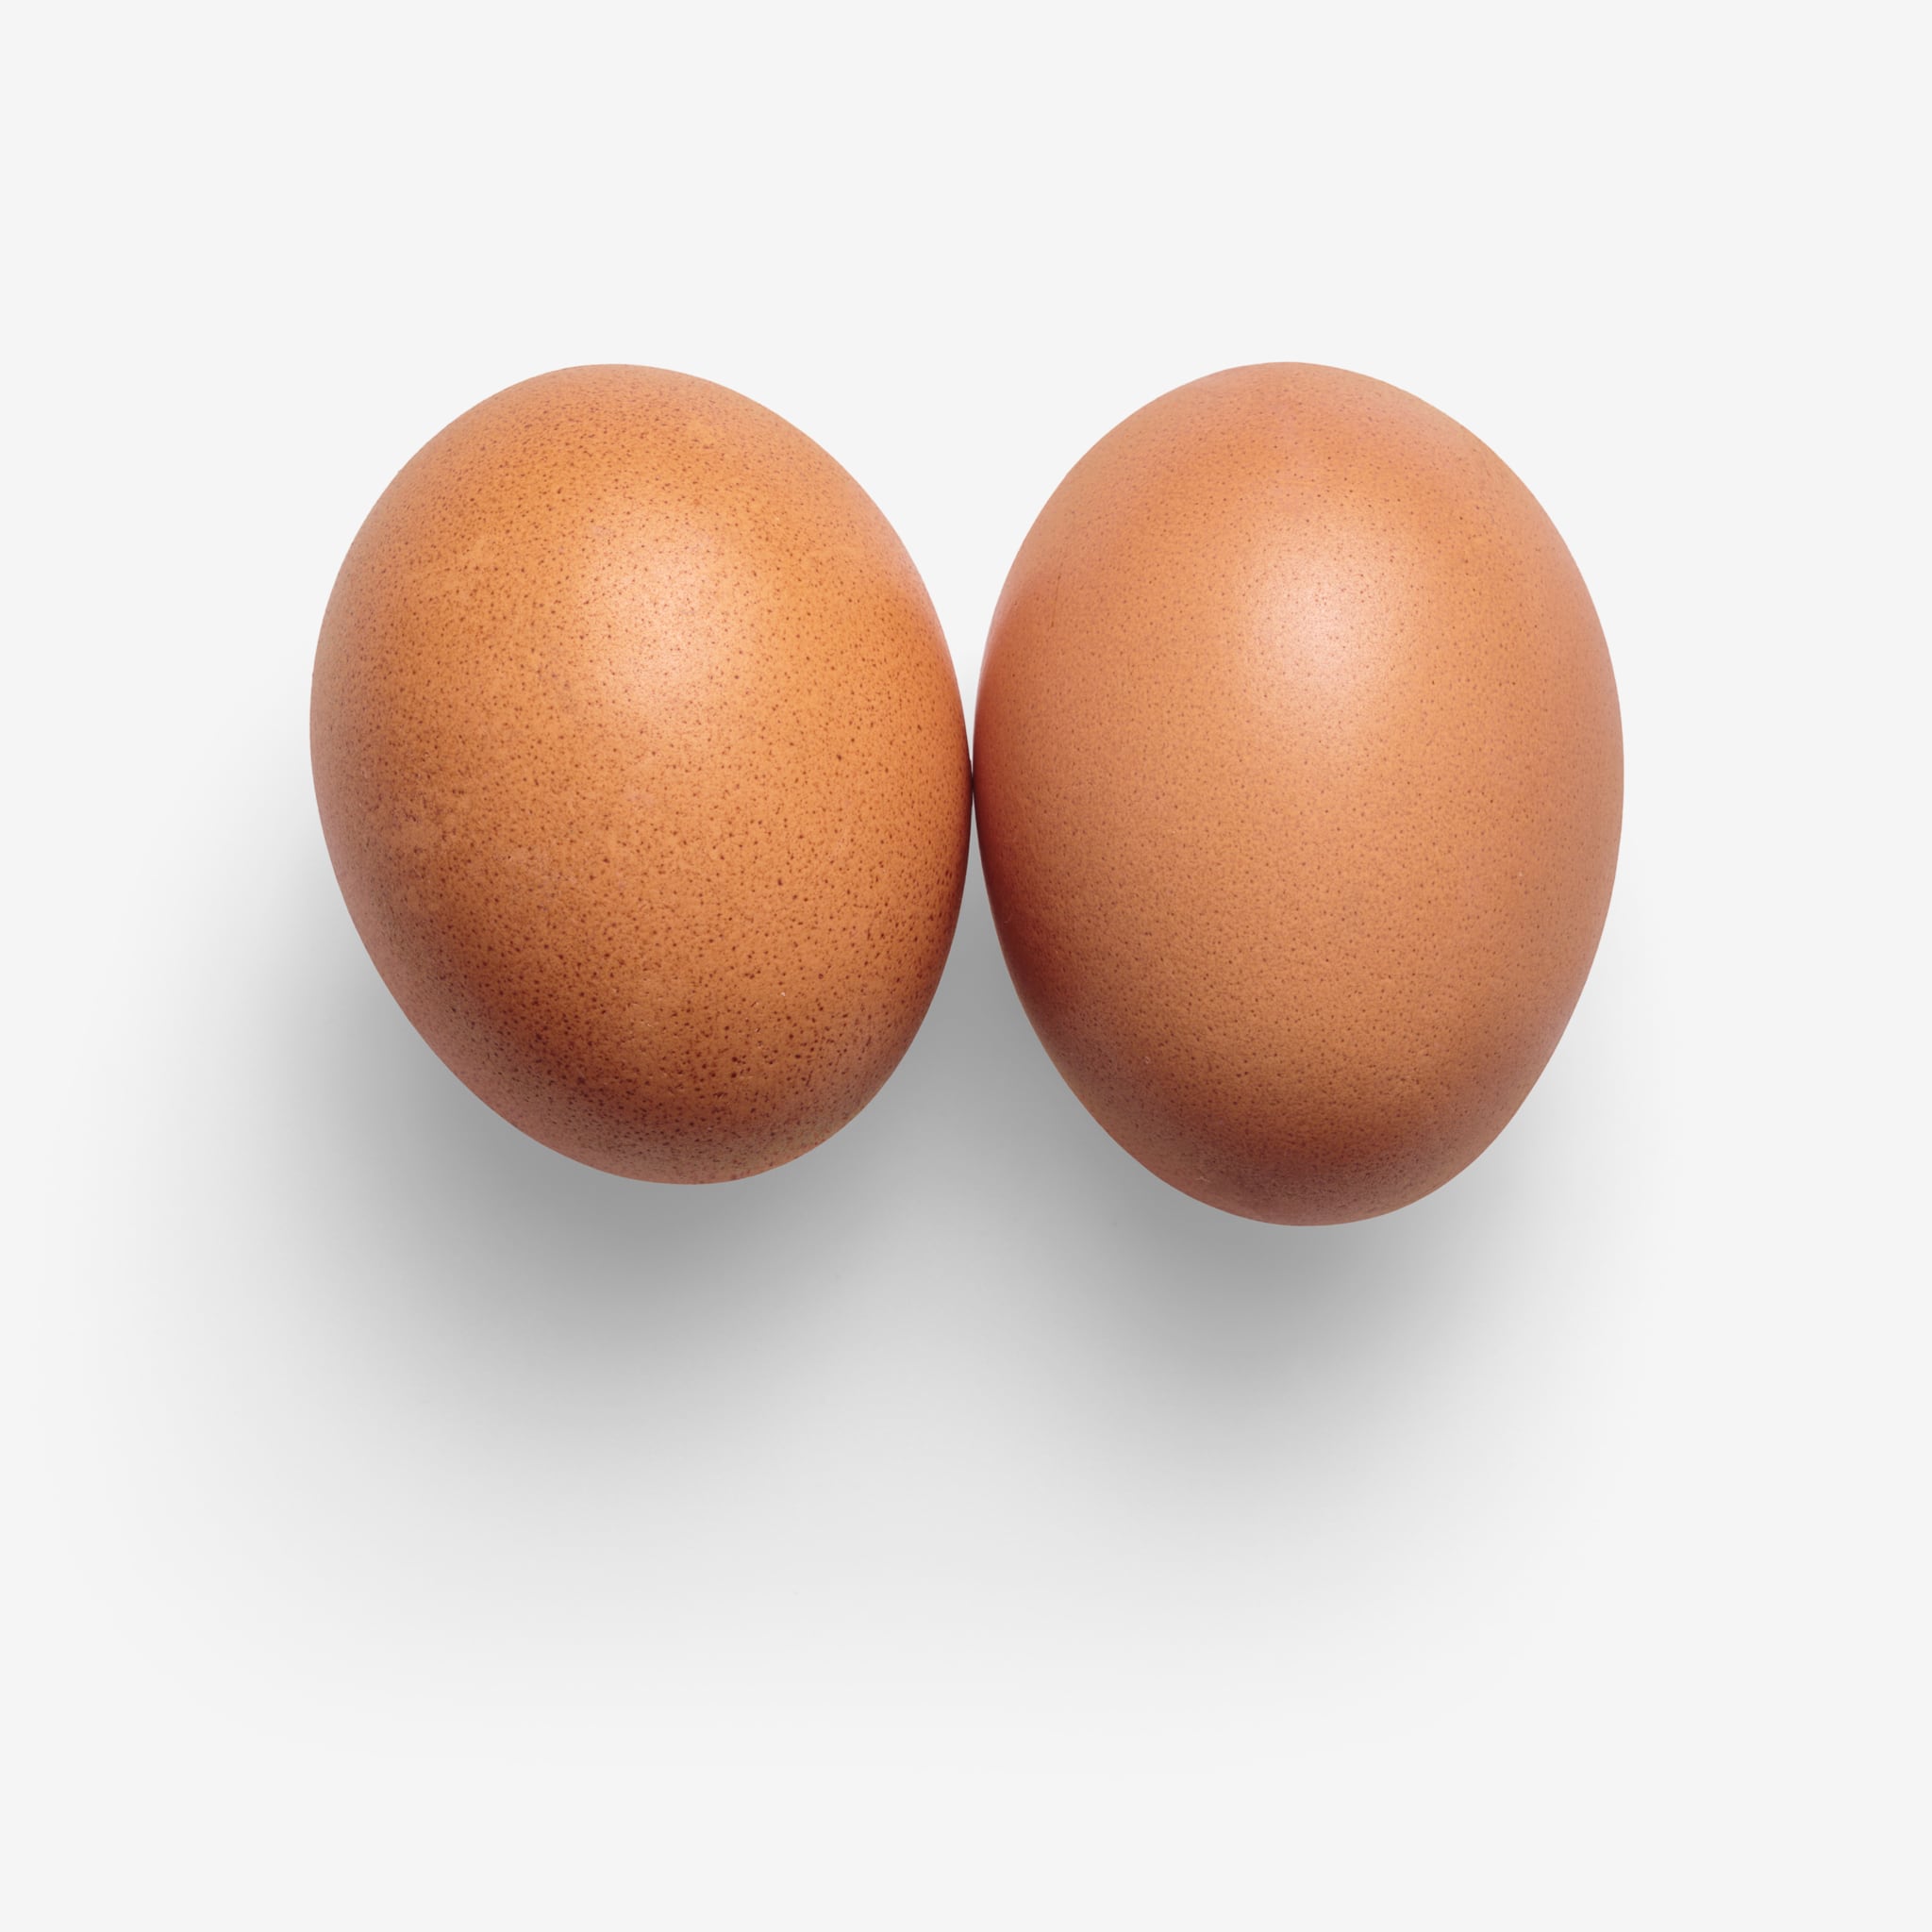 Egg image asset with transparent background